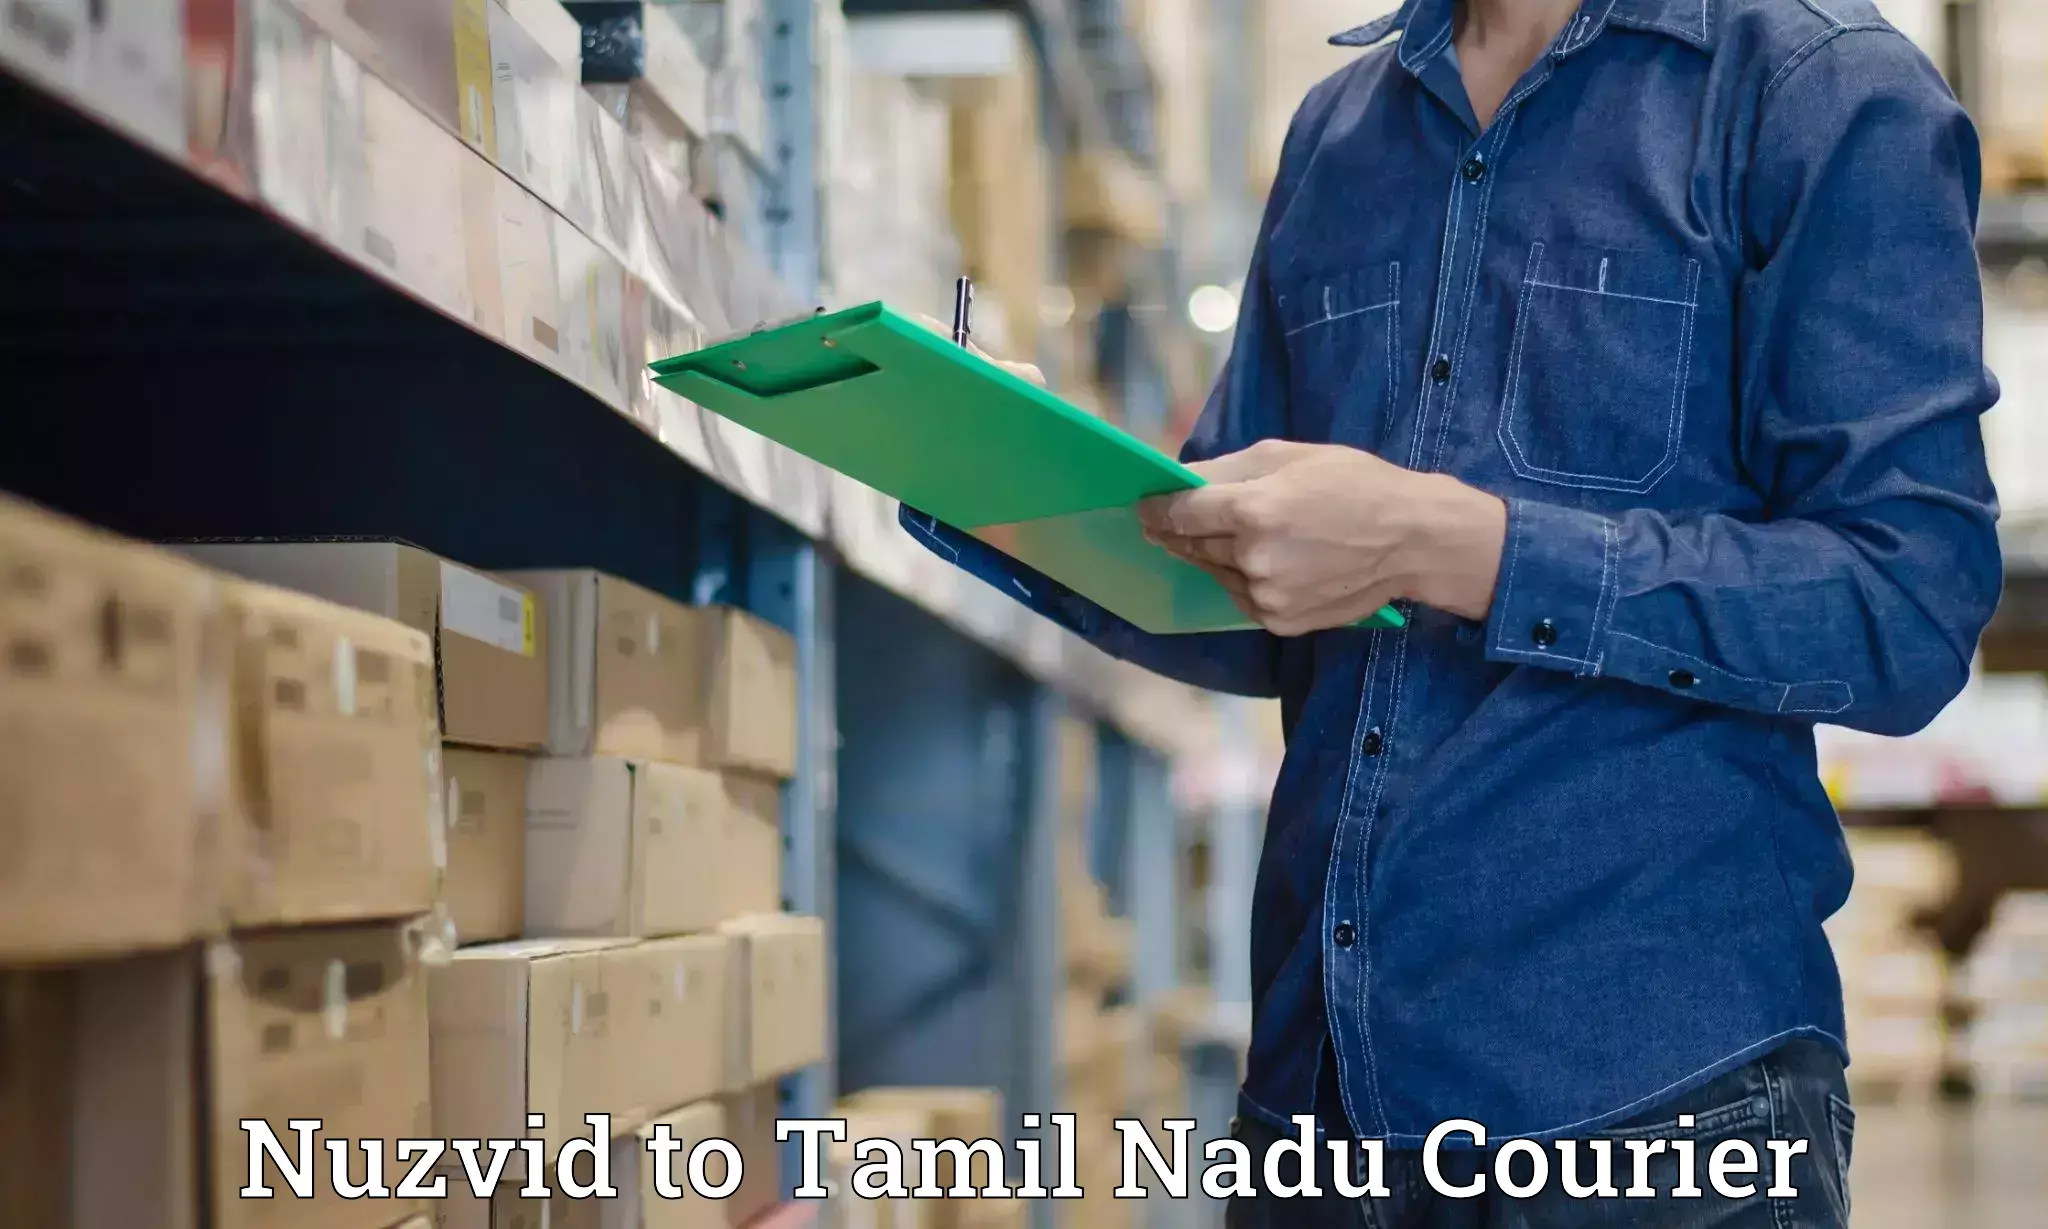 Digital courier platforms Nuzvid to Chennai Port